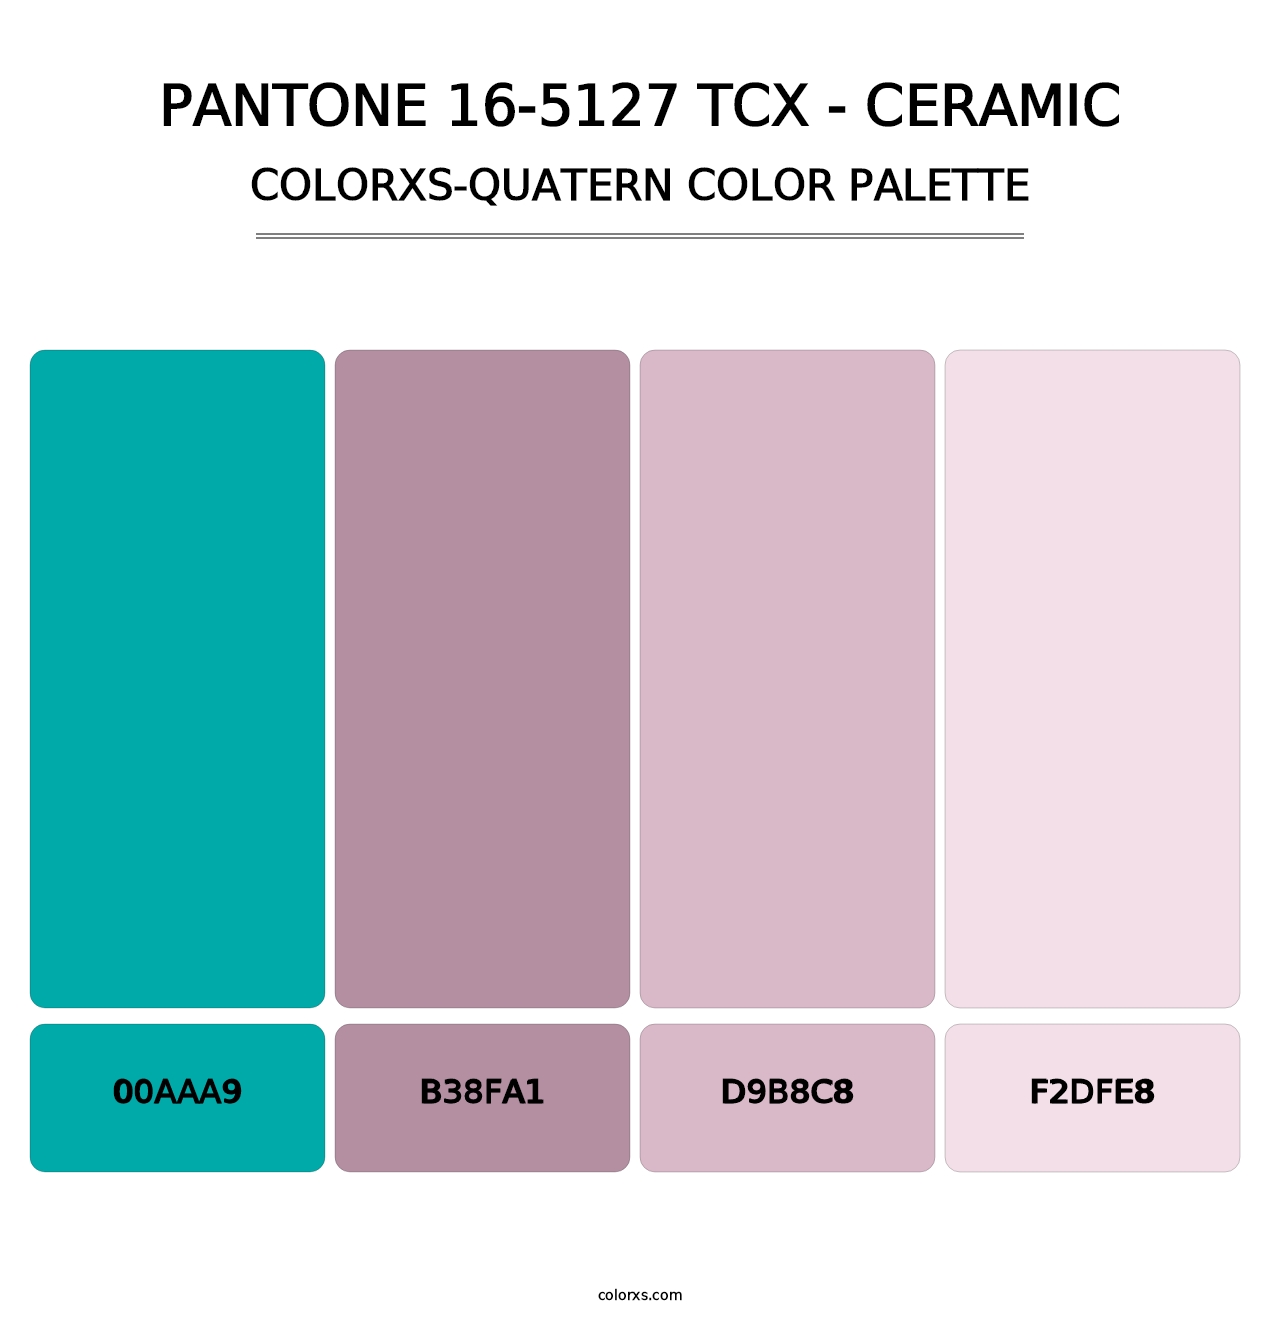 PANTONE 16-5127 TCX - Ceramic - Colorxs Quatern Palette